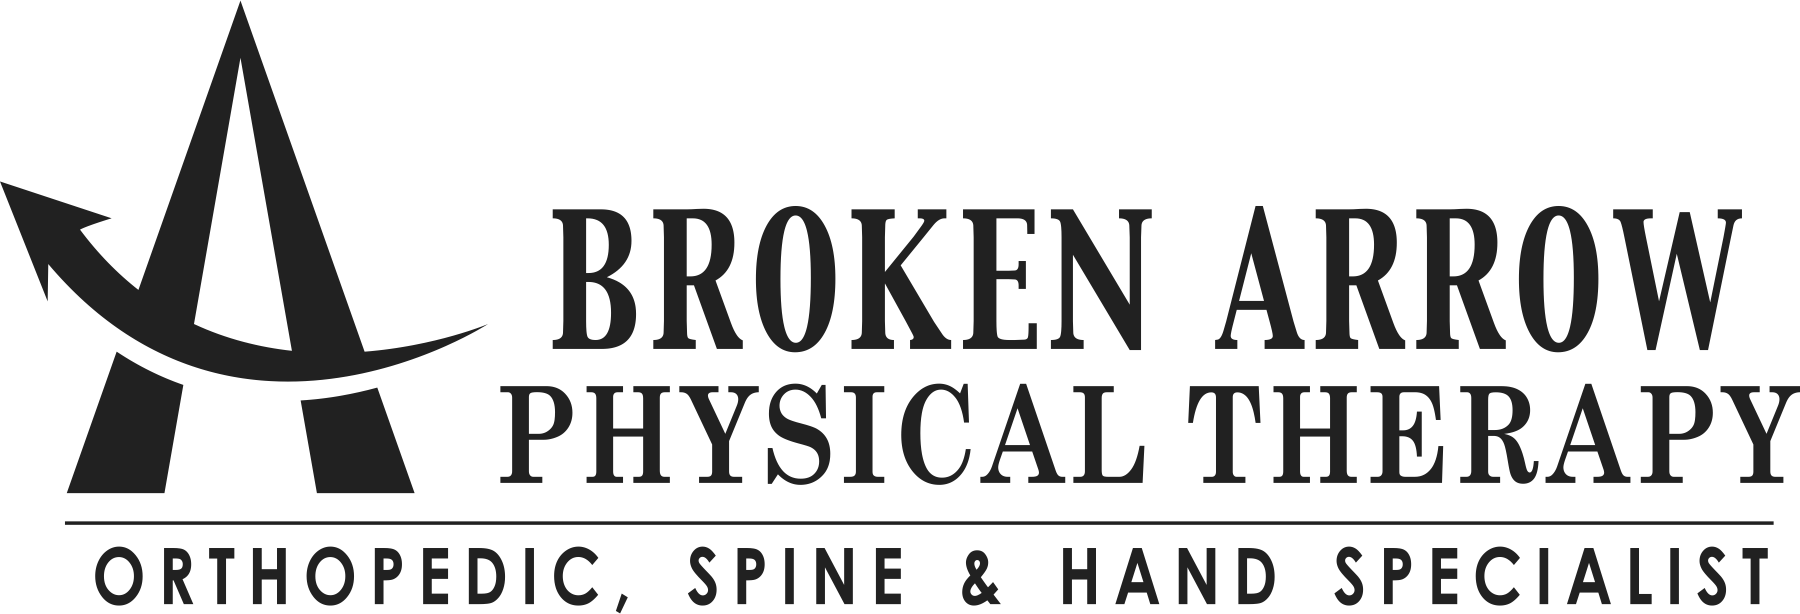 Broken Arrow Physical Therapy